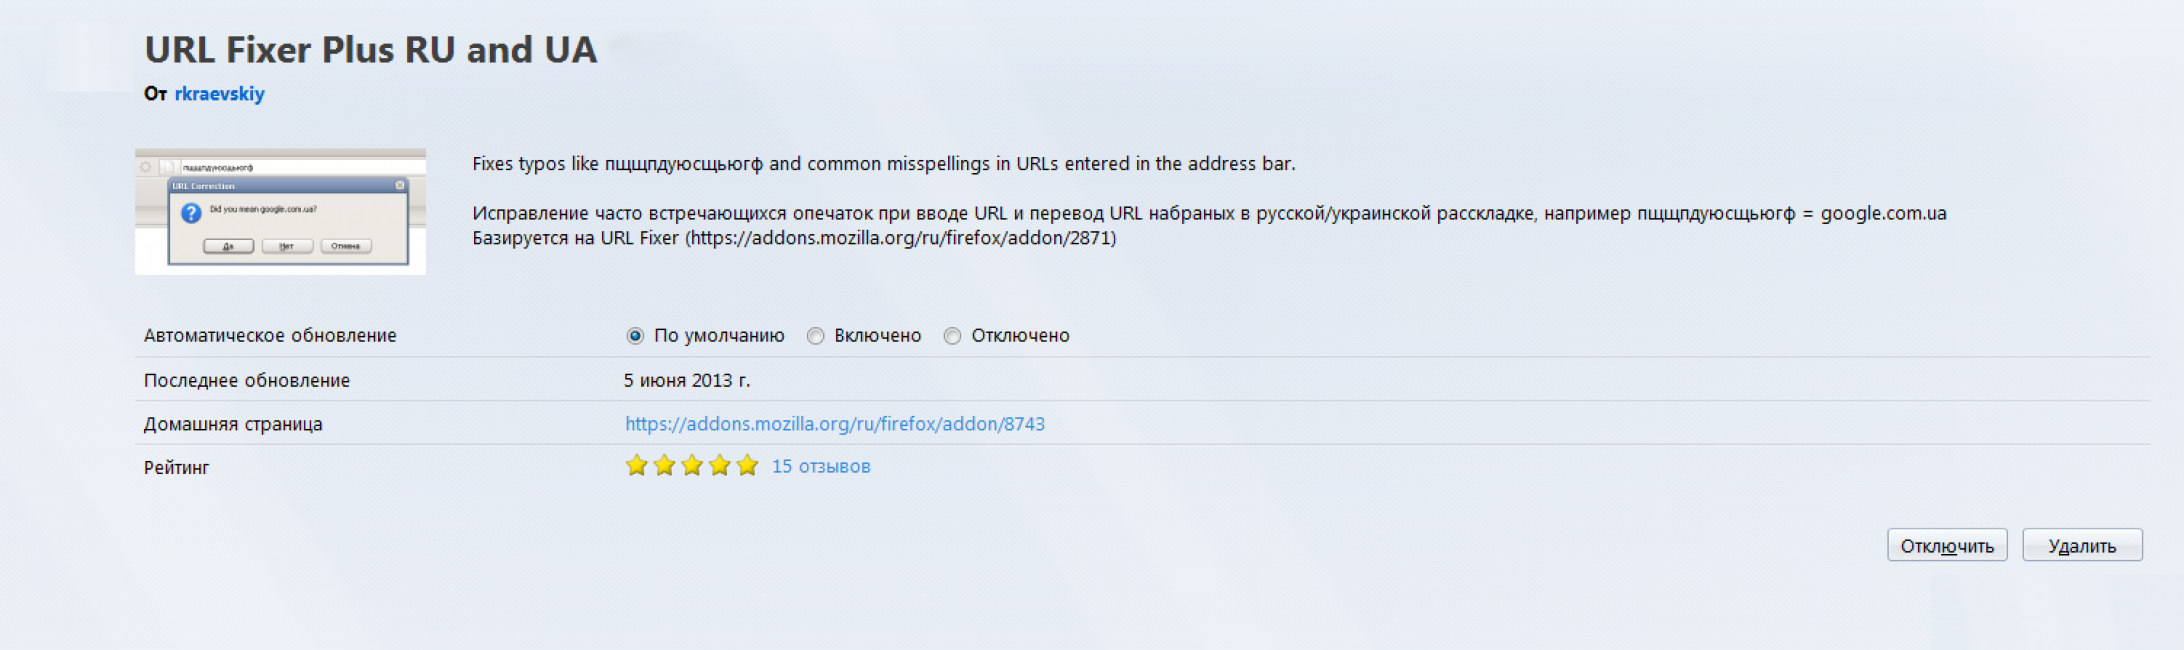 URL Fixer plus Ru and UA